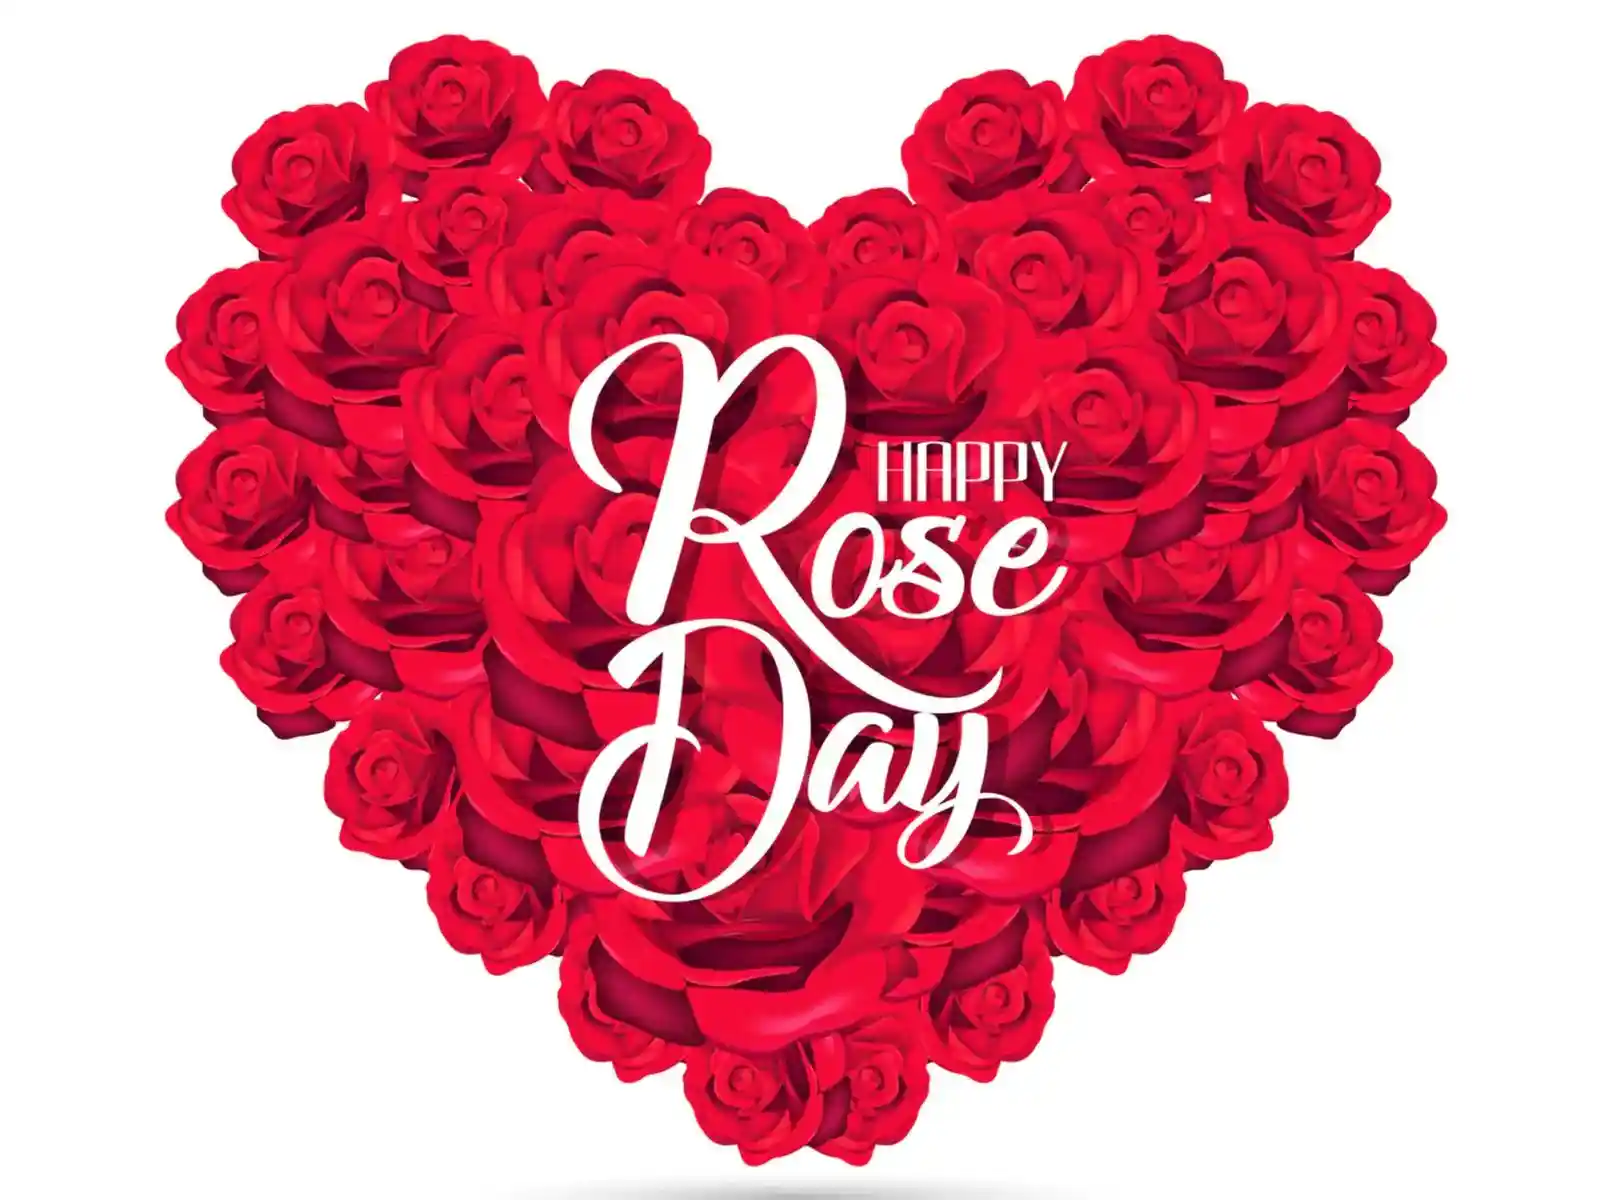 Happy rose day 